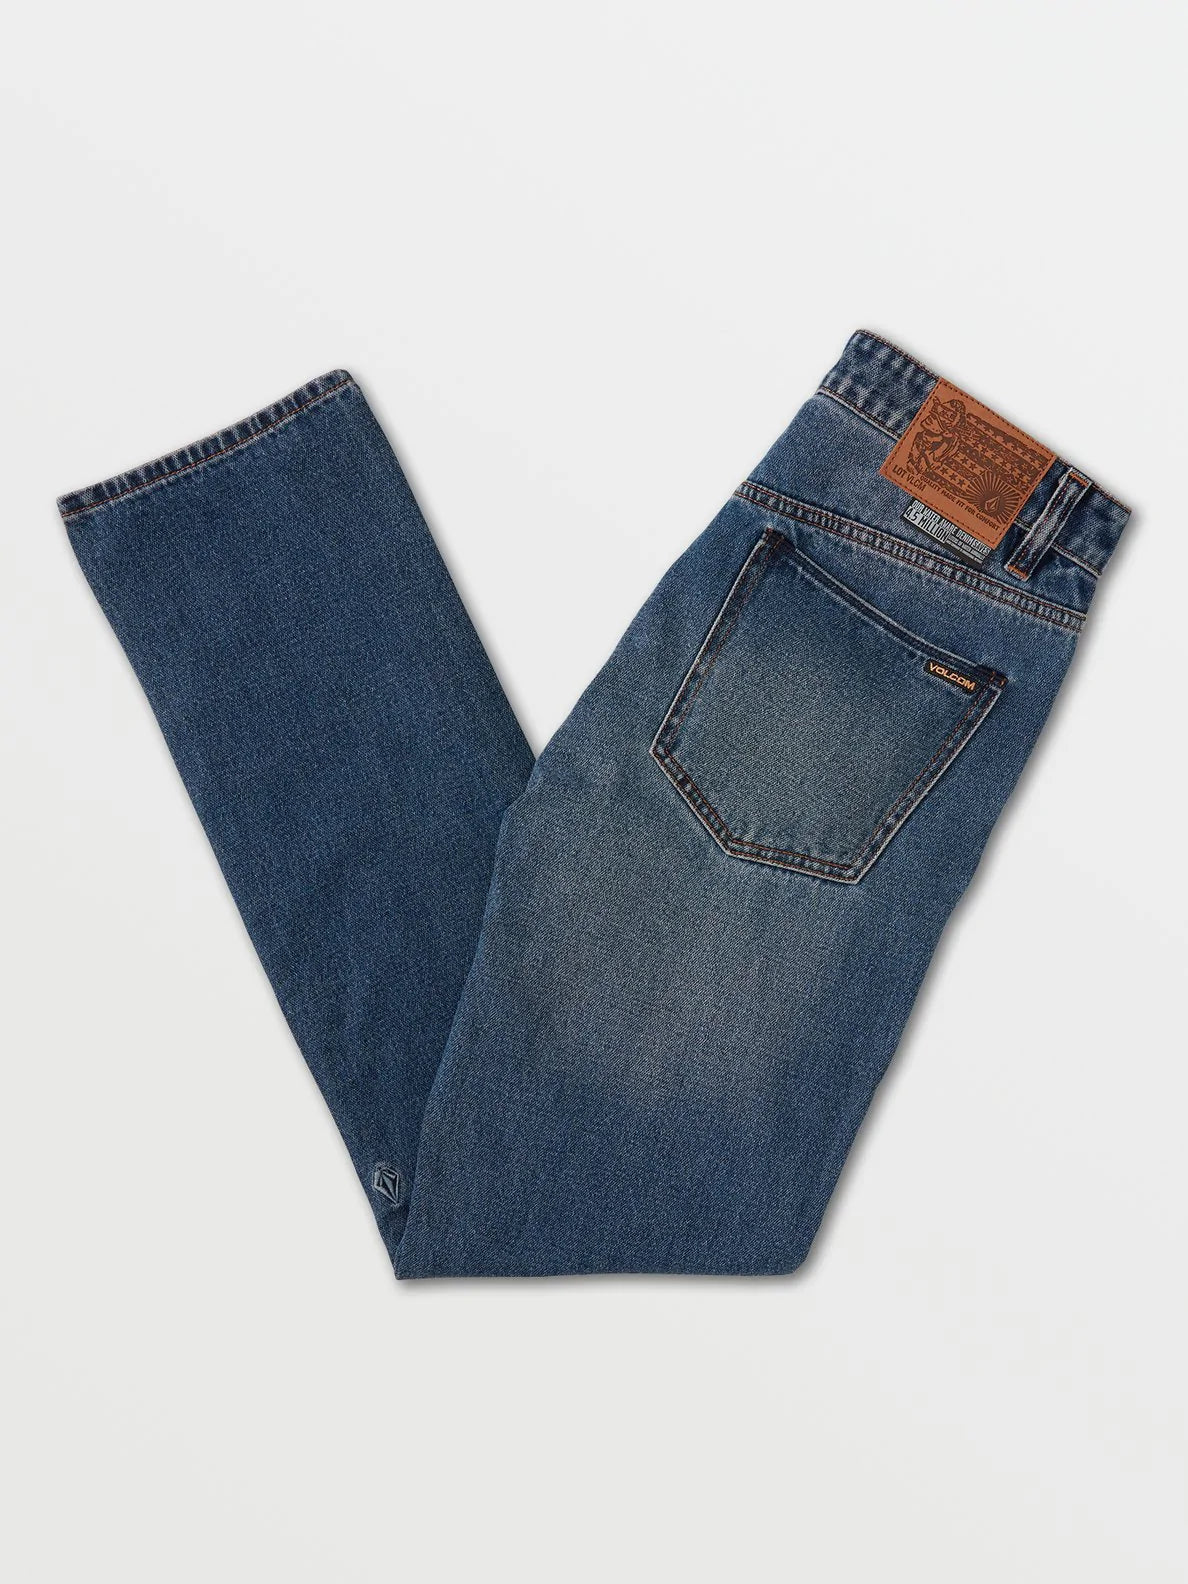 Men's Volcom blue jeans -FW21